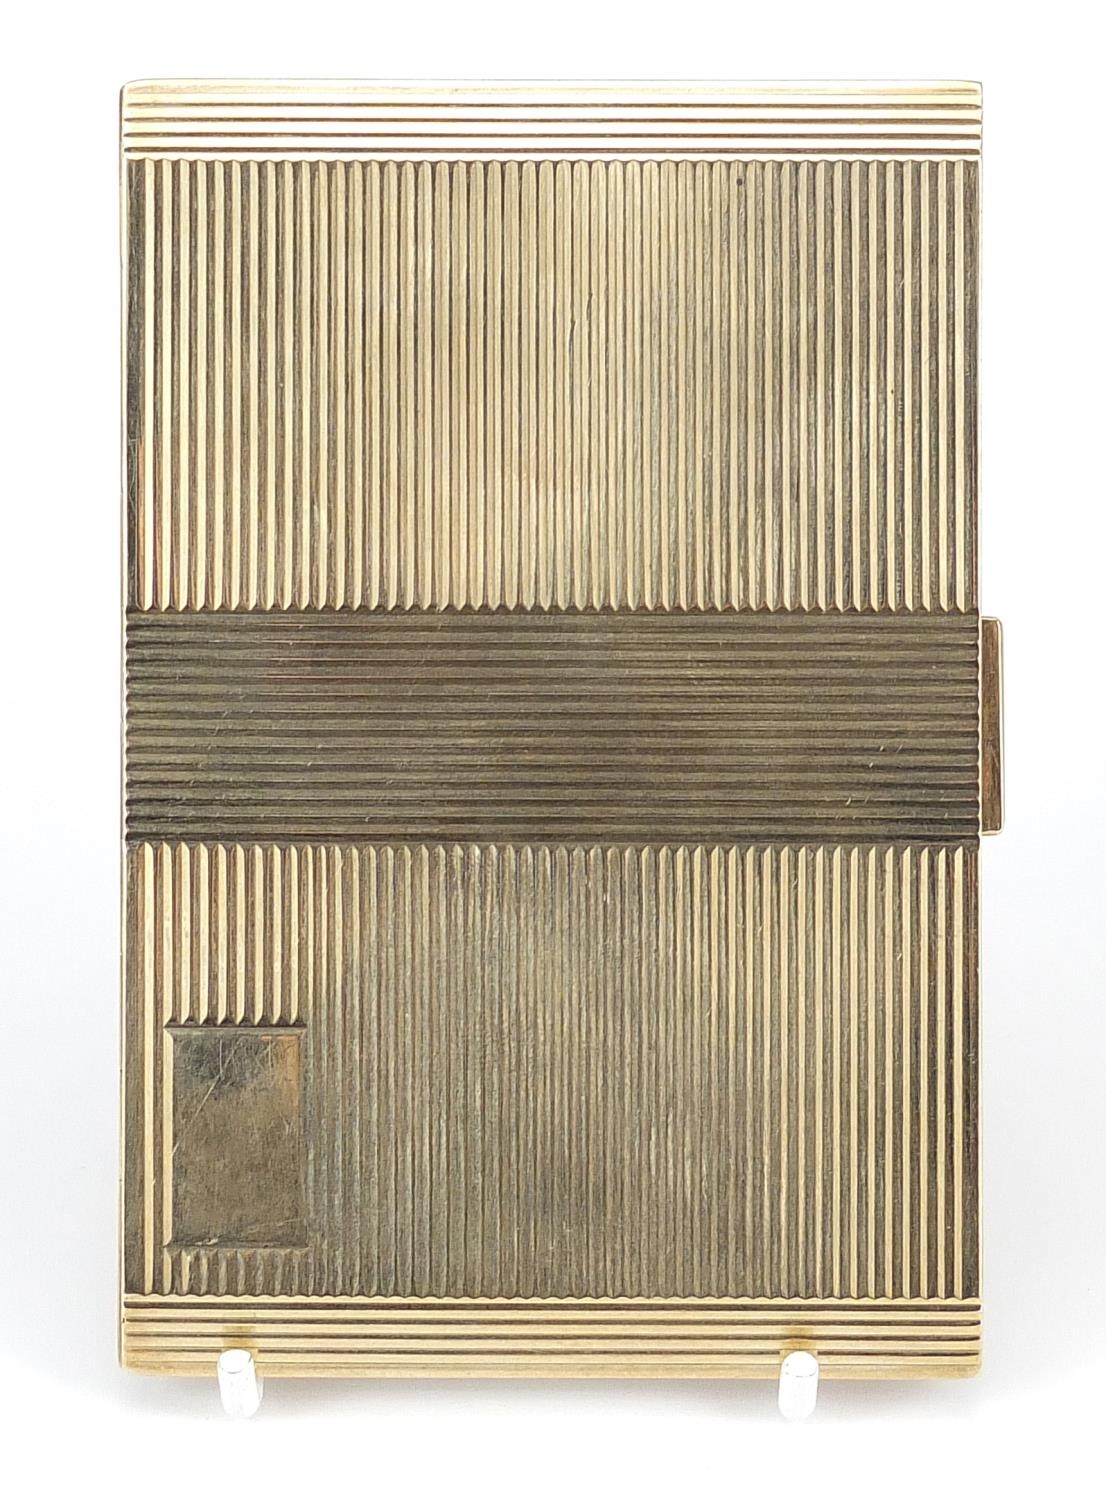 Large 9ct gold cigarette case with engine turned decoration, KW London 1945, 12.5cm x 8.5cm, 188.